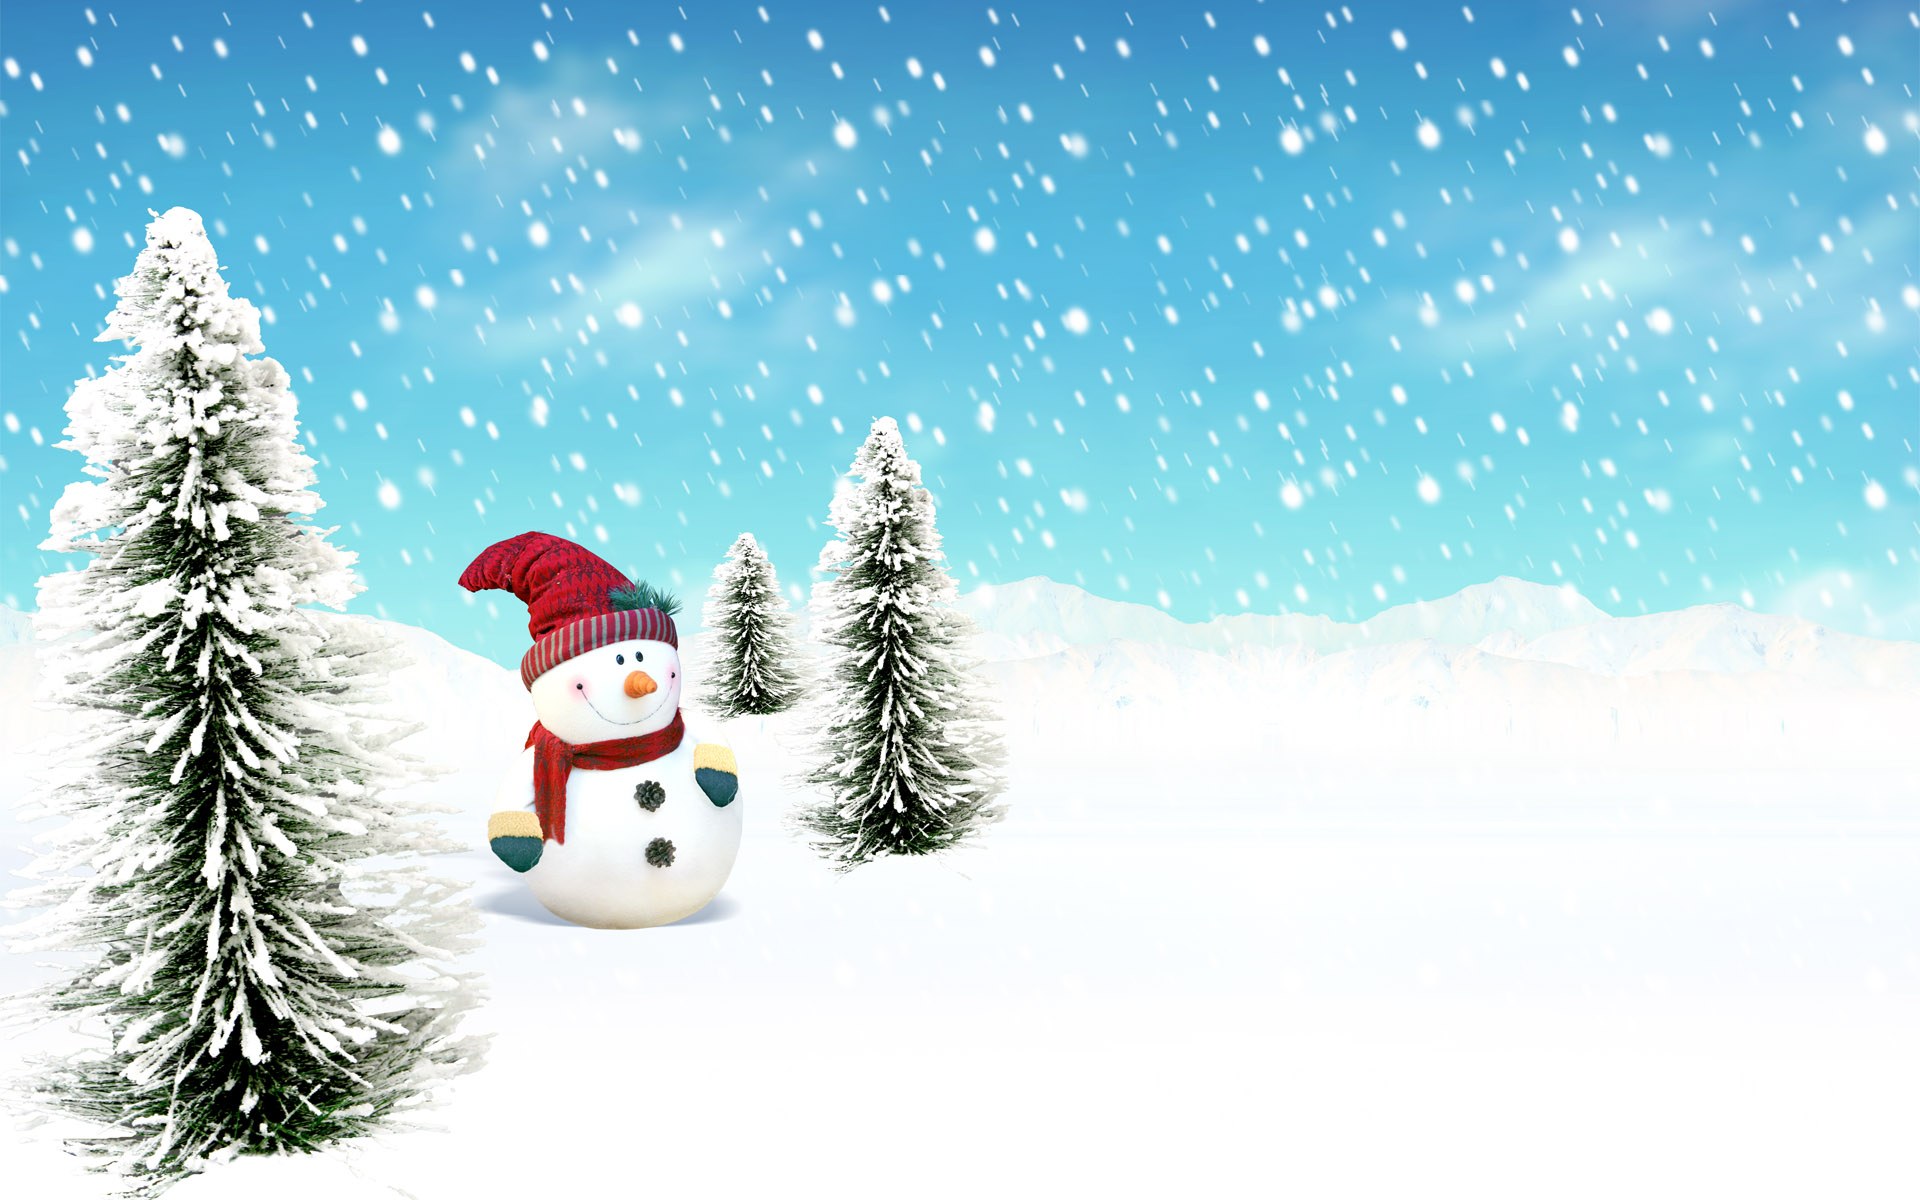 40 Animated Christmas Wallpapers For 2015